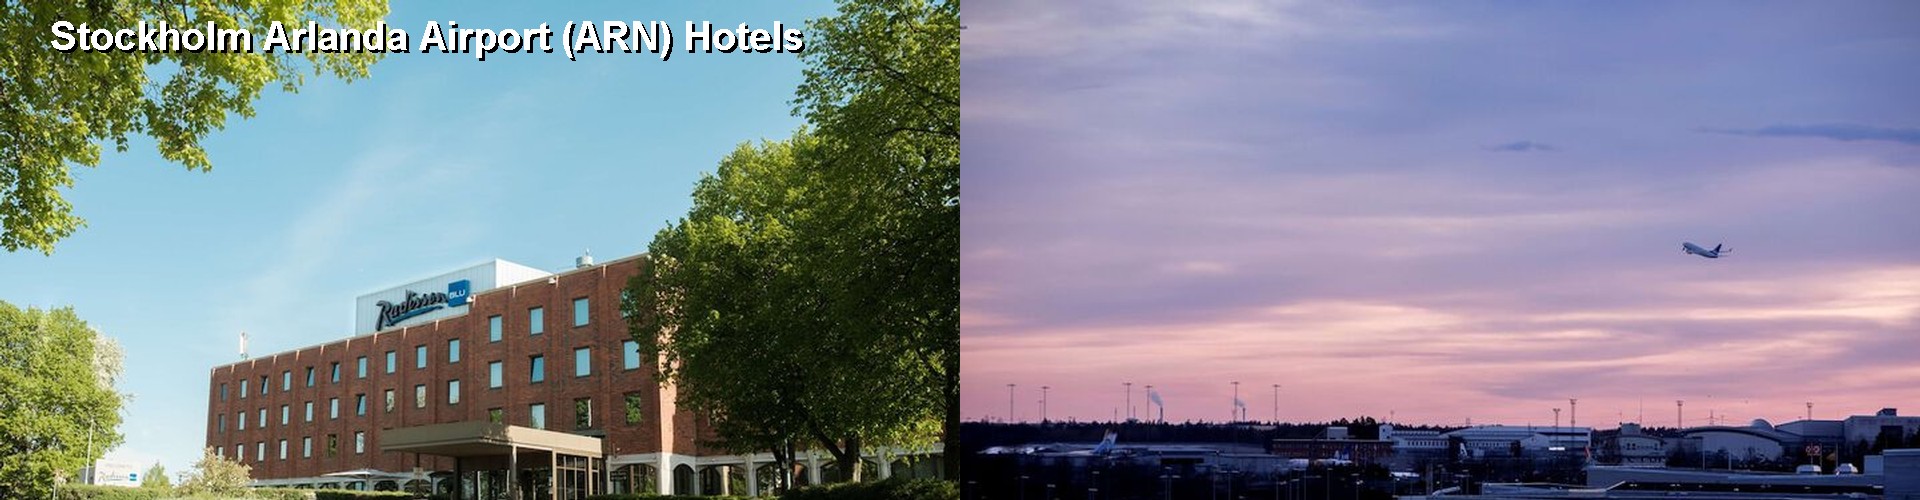 5 Best Hotels near Stockholm Arlanda Airport (ARN)